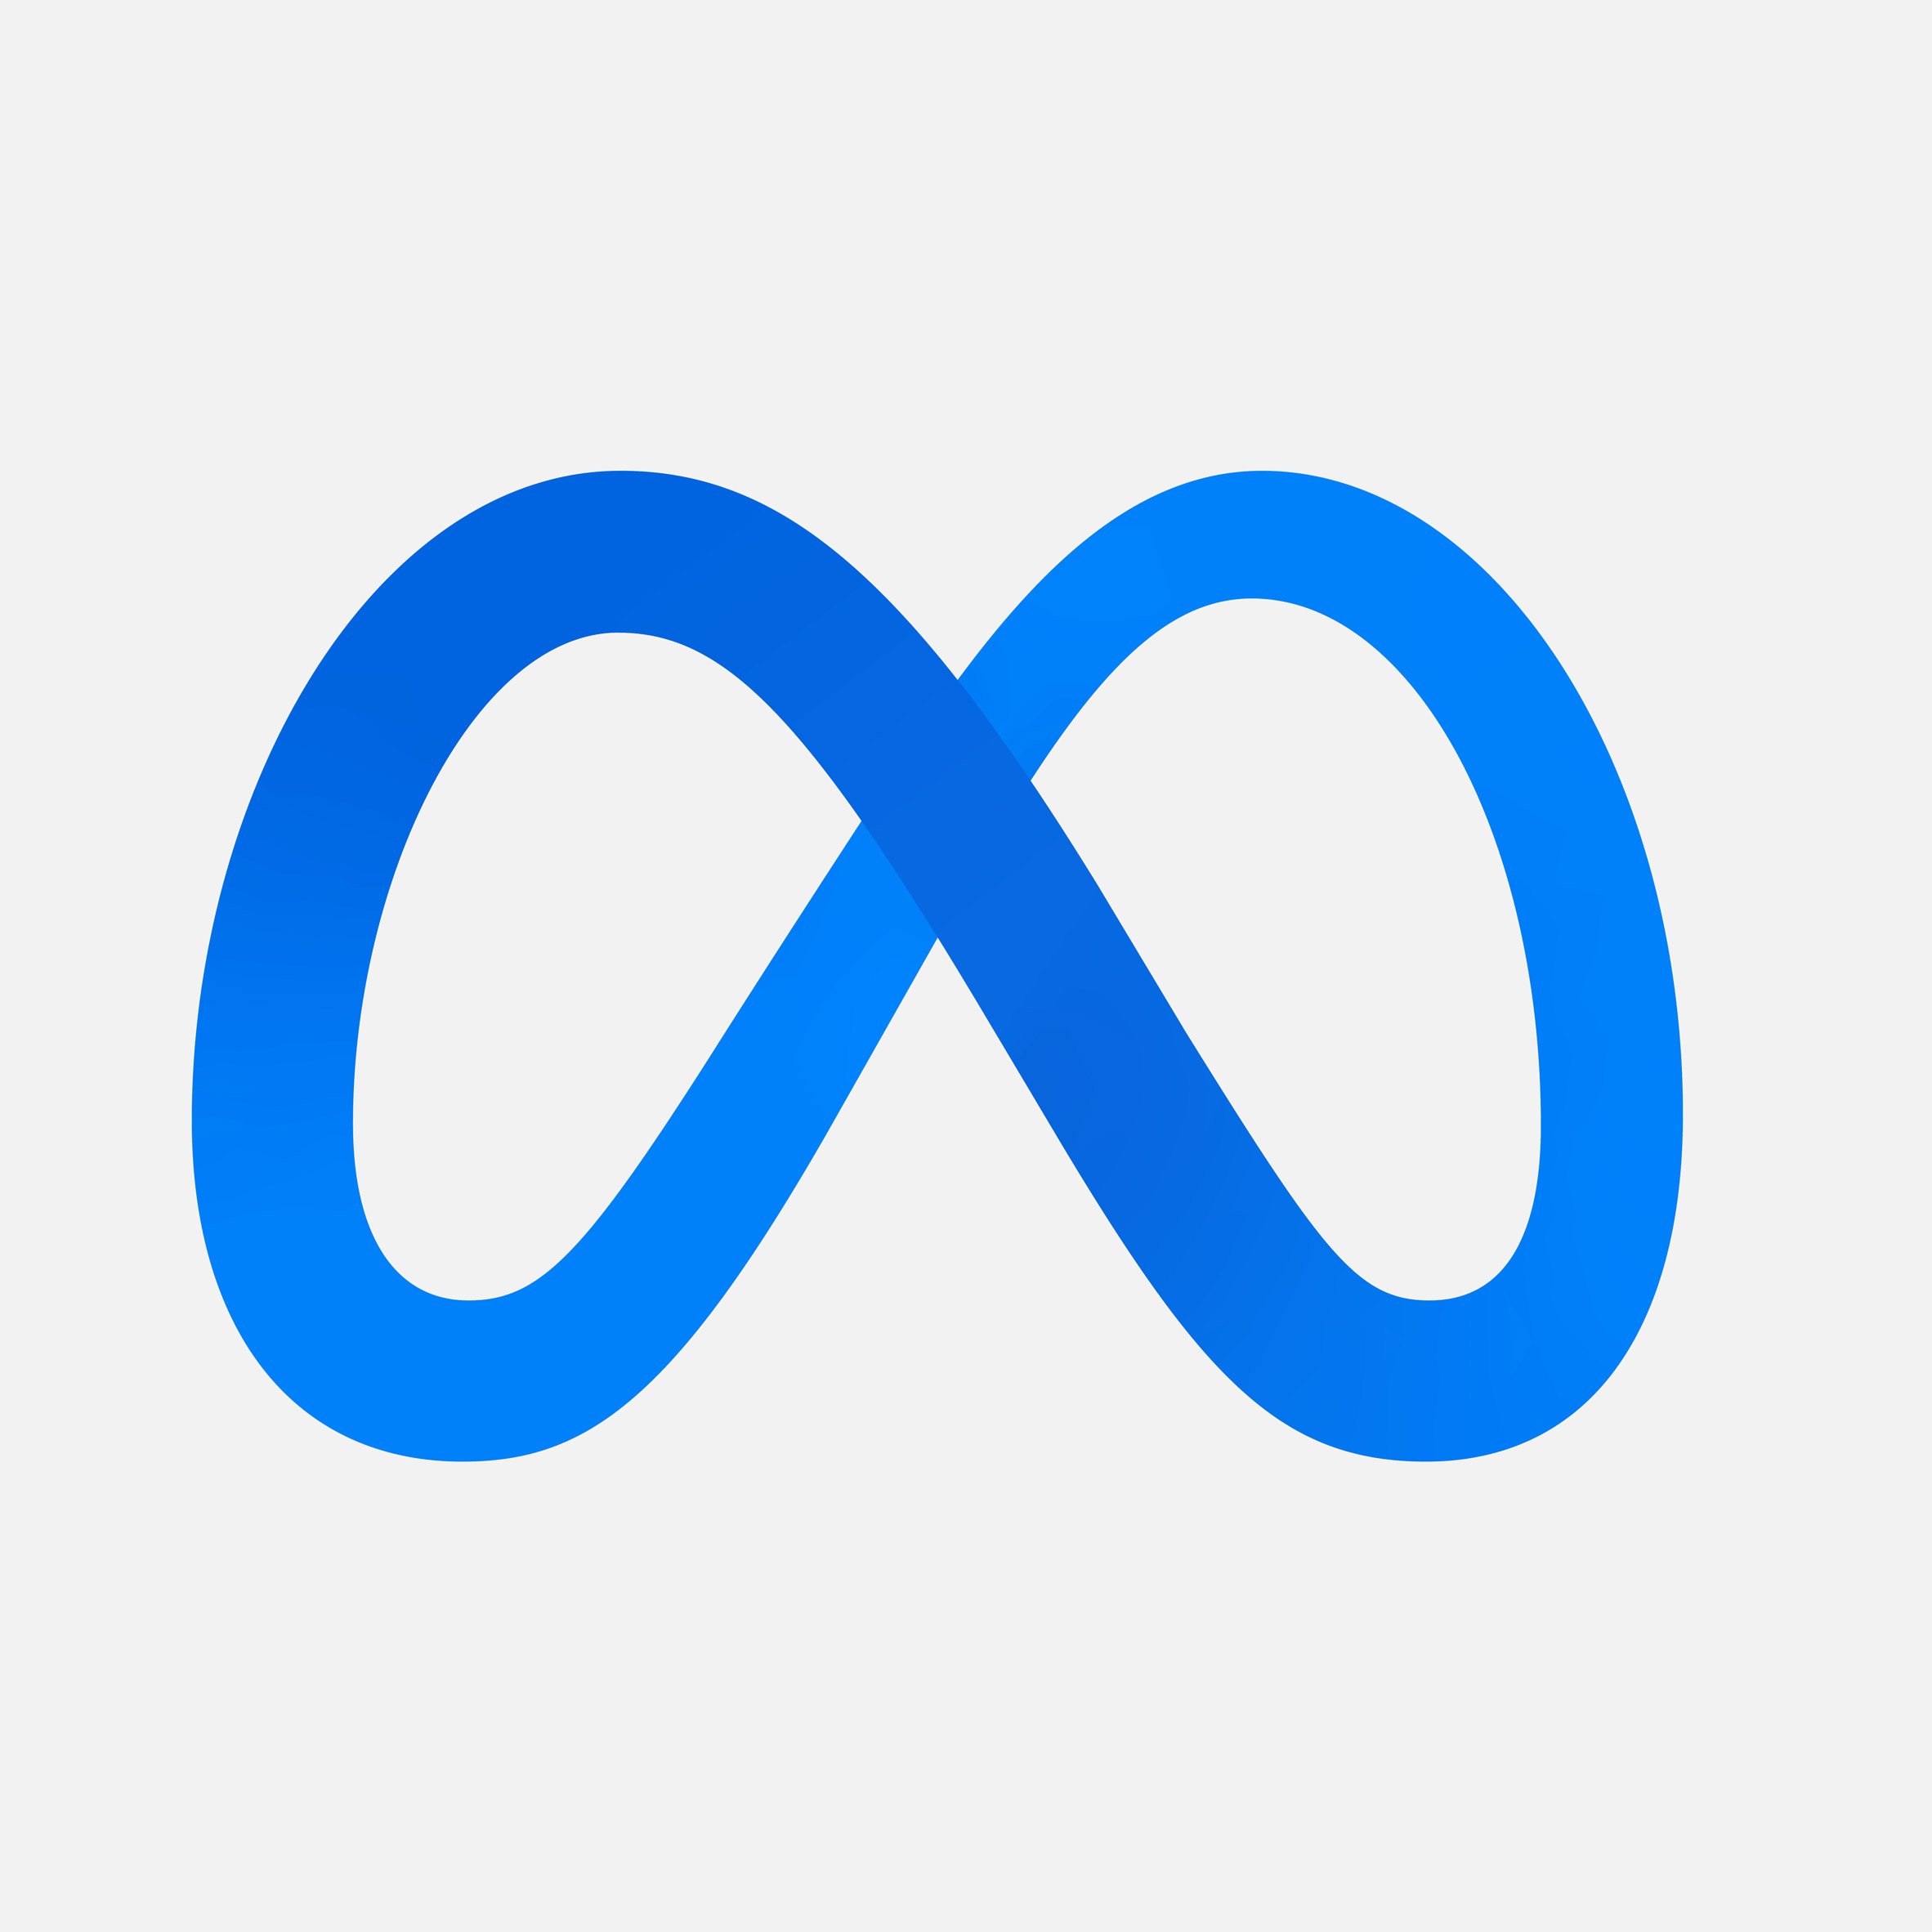 Blue infinity logo for Meta